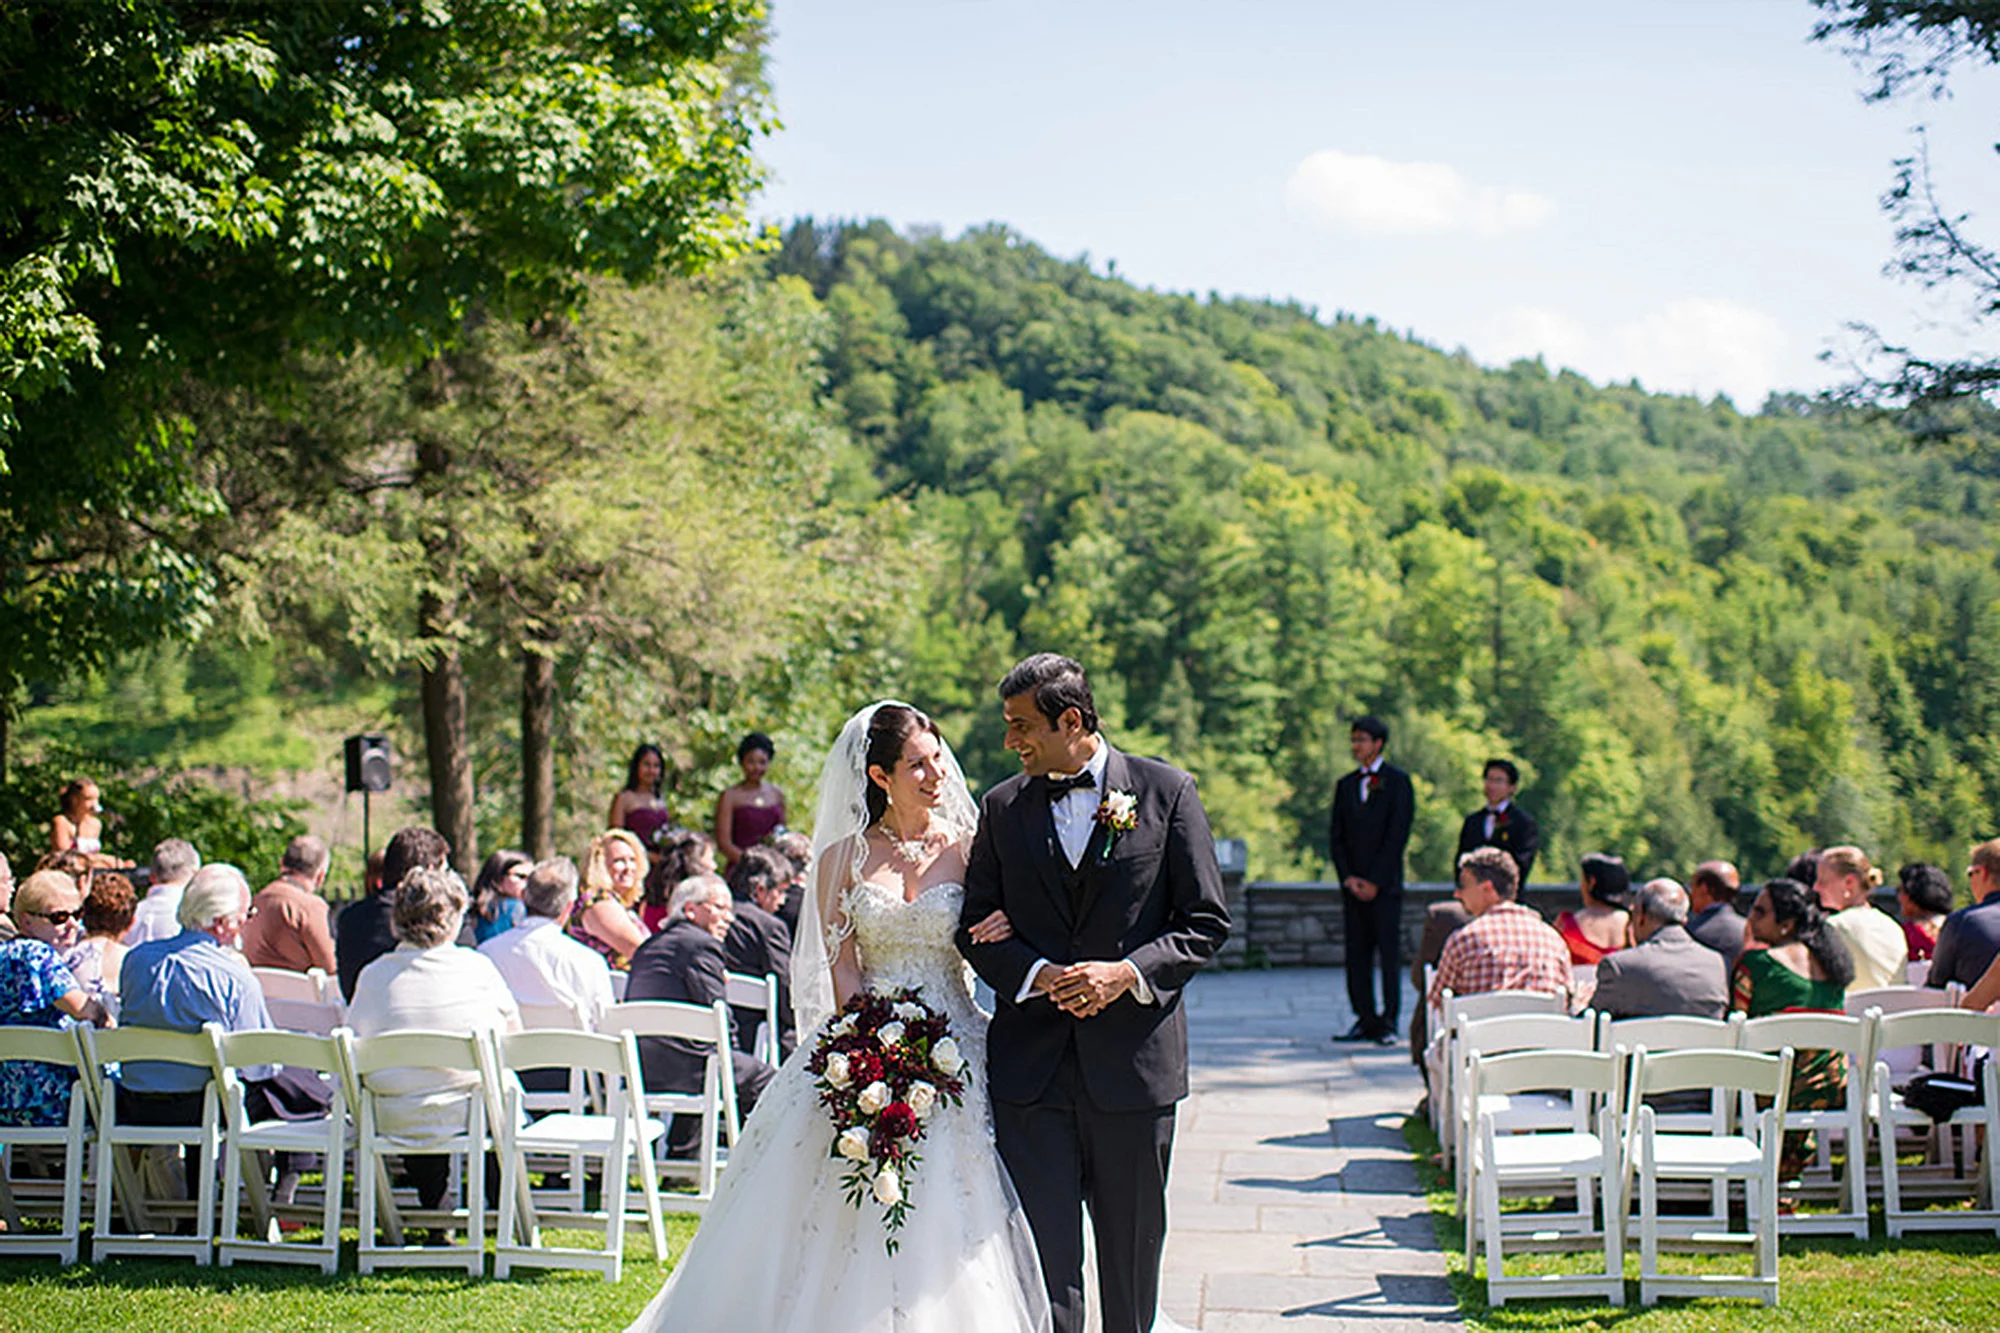 Letchworth State Park Wedding Venues